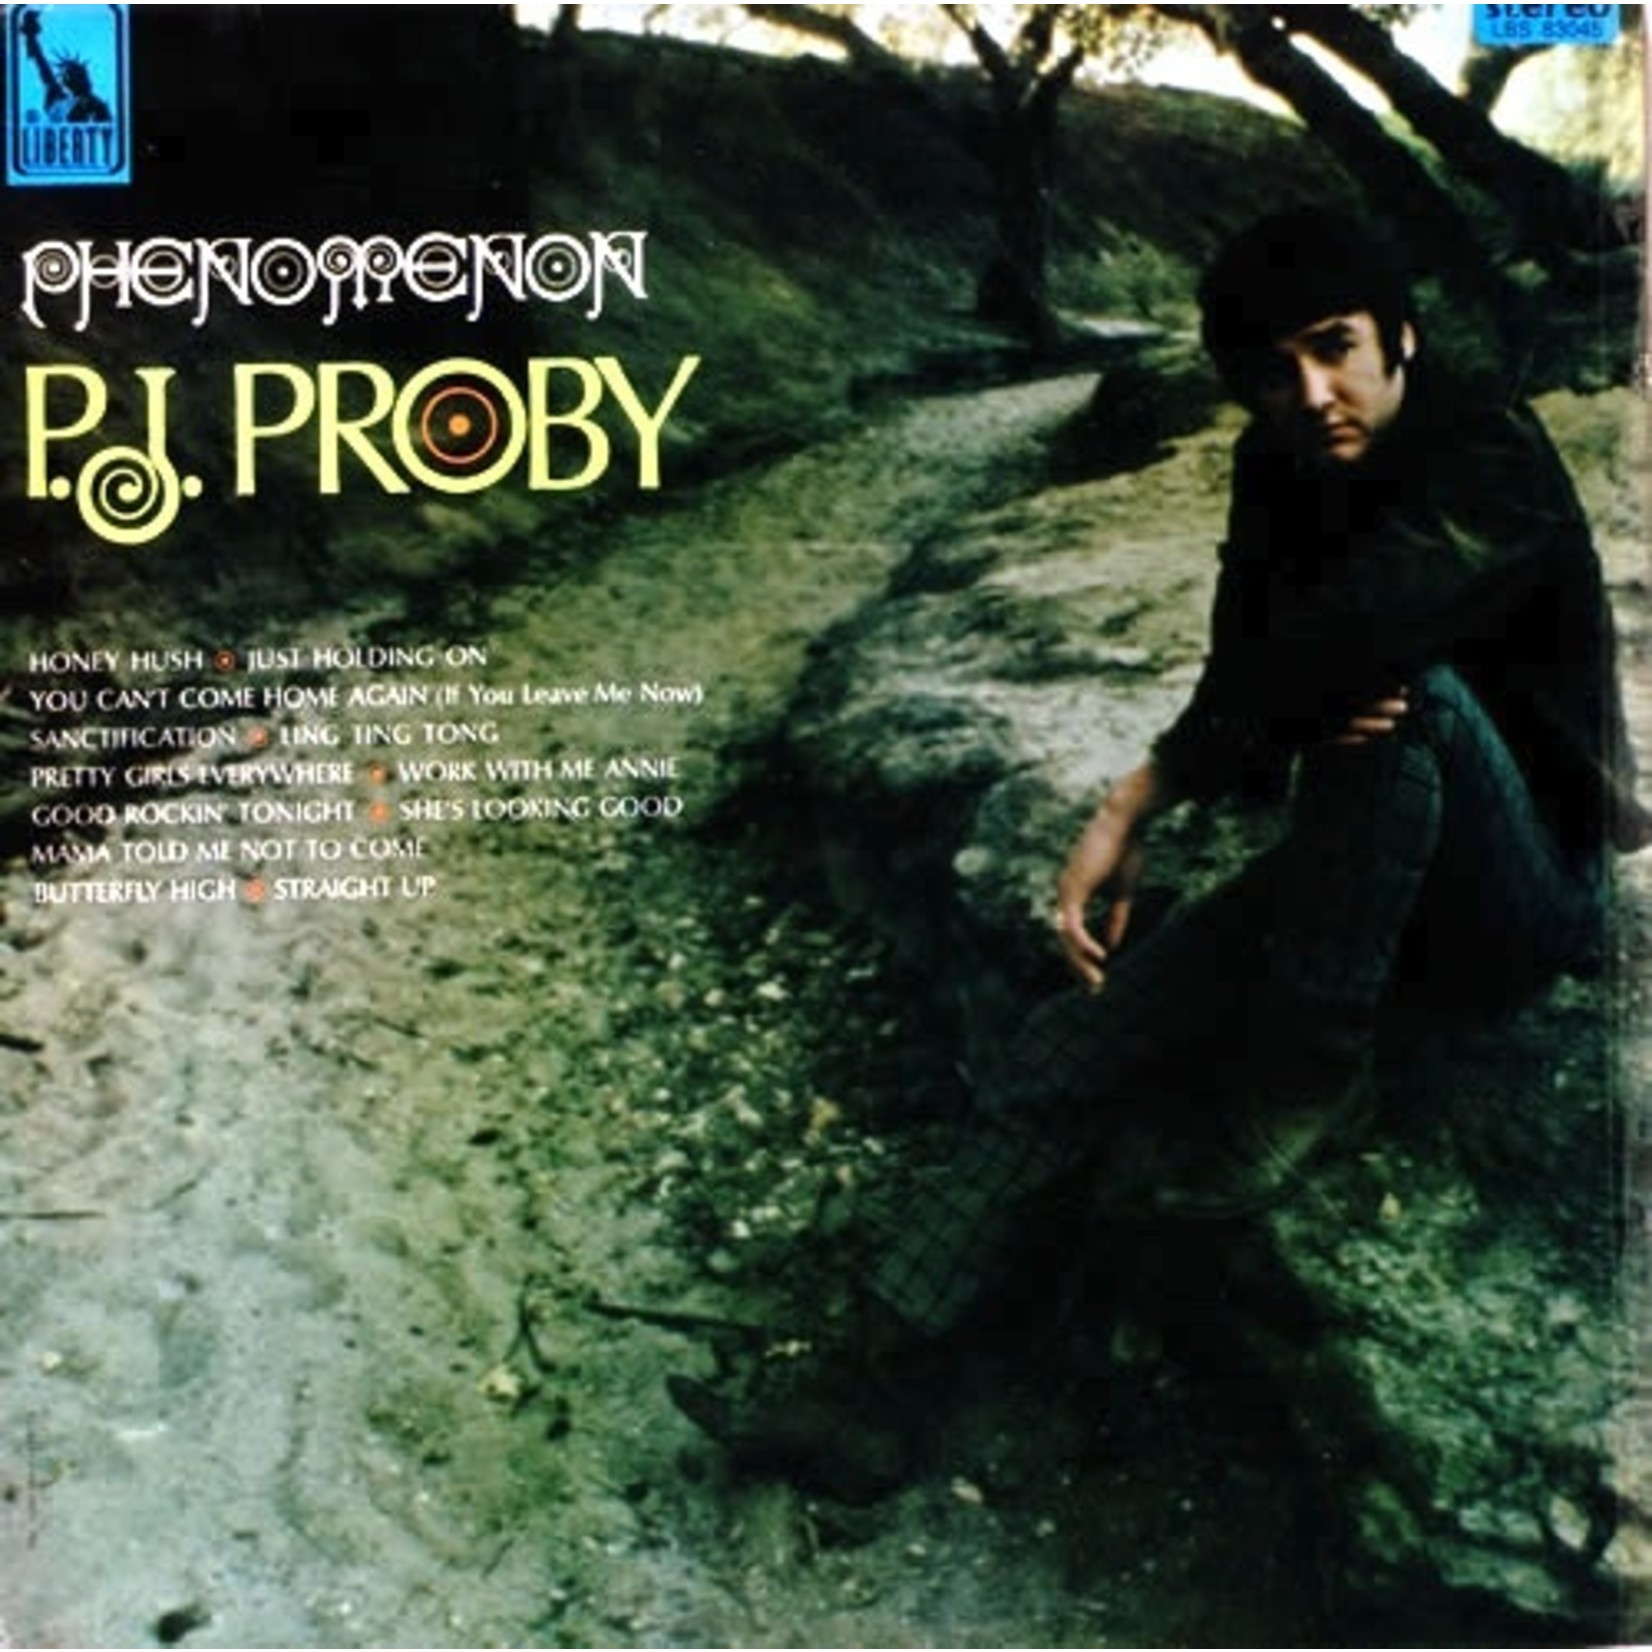 [Vintage] P.J. Proby - Phenomenon